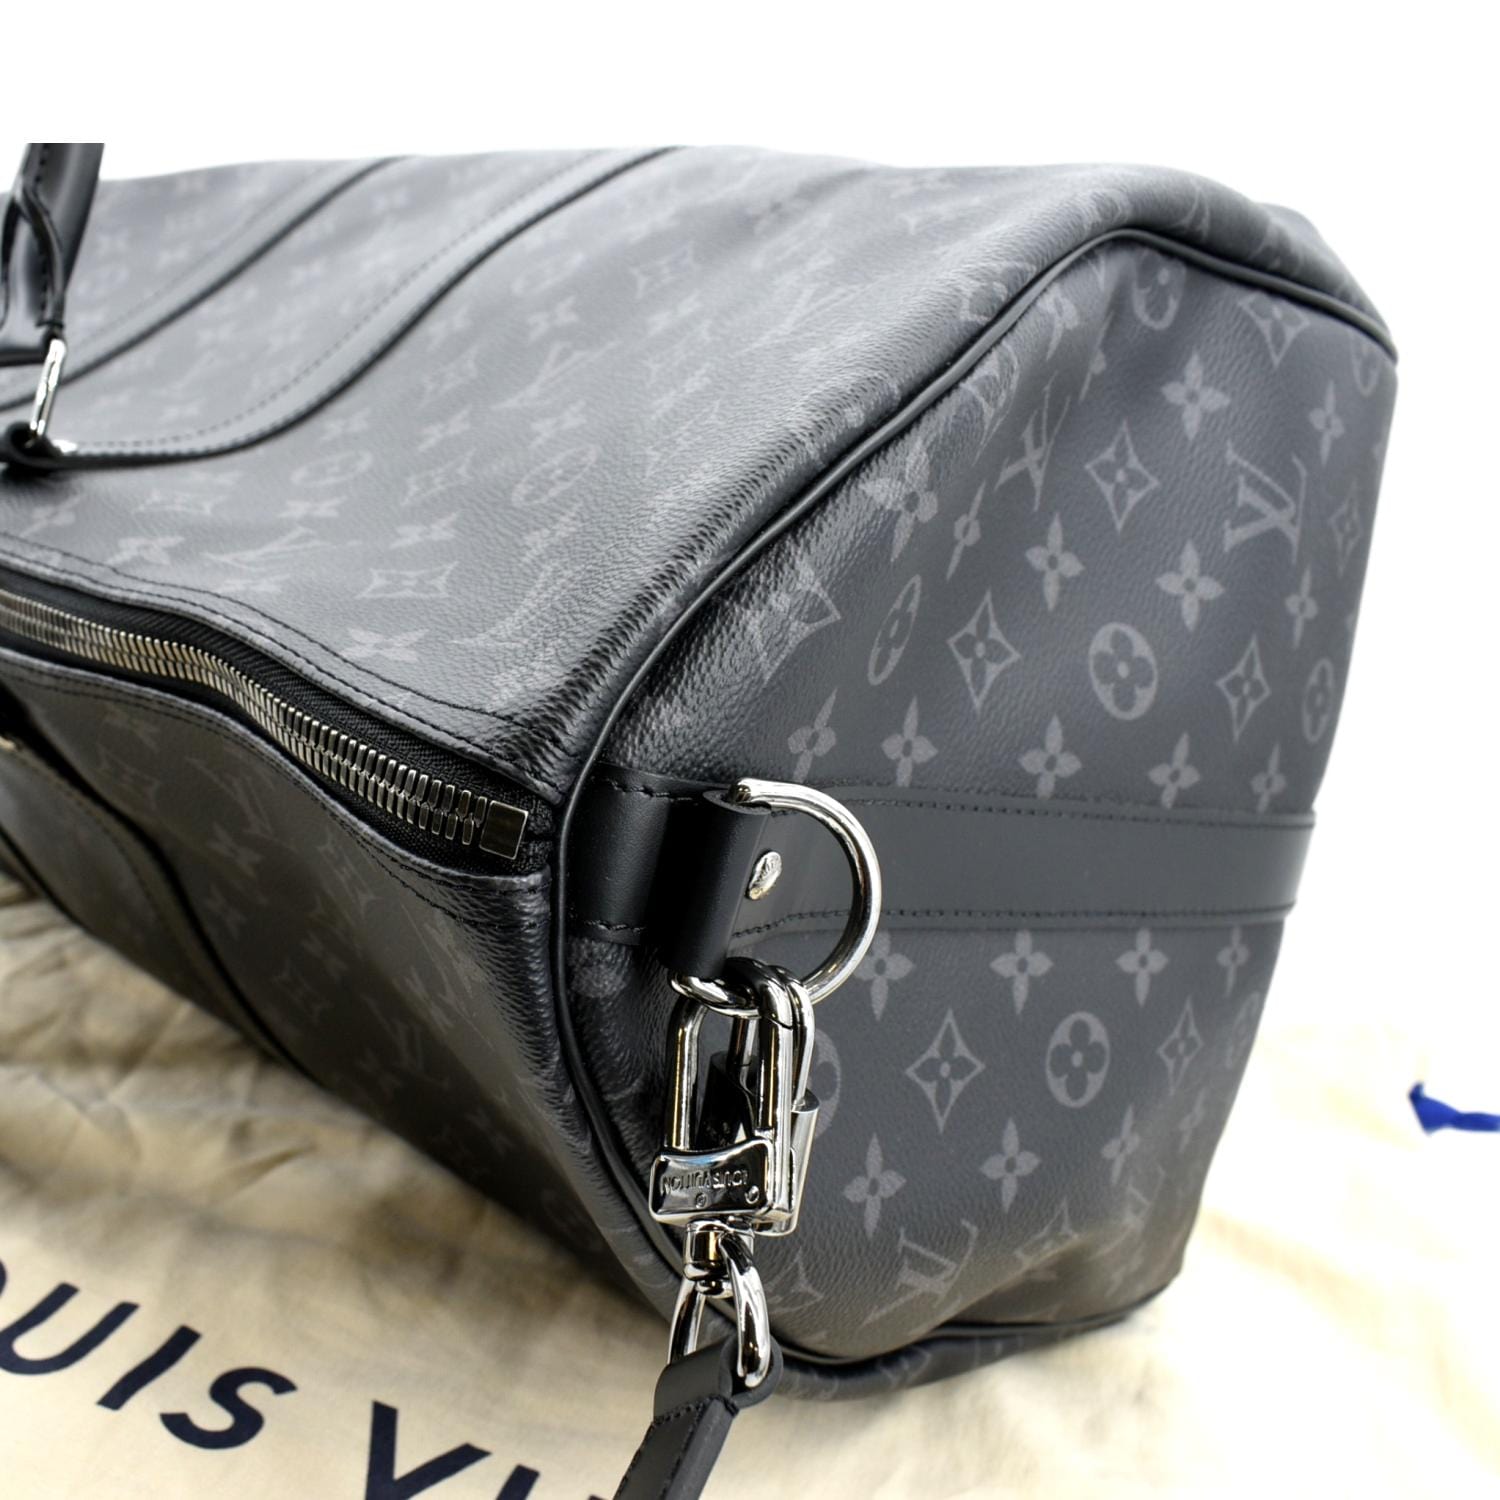 Louis Vuitton Monogram Eclipse Keepall 45 Bandouliere Bag at